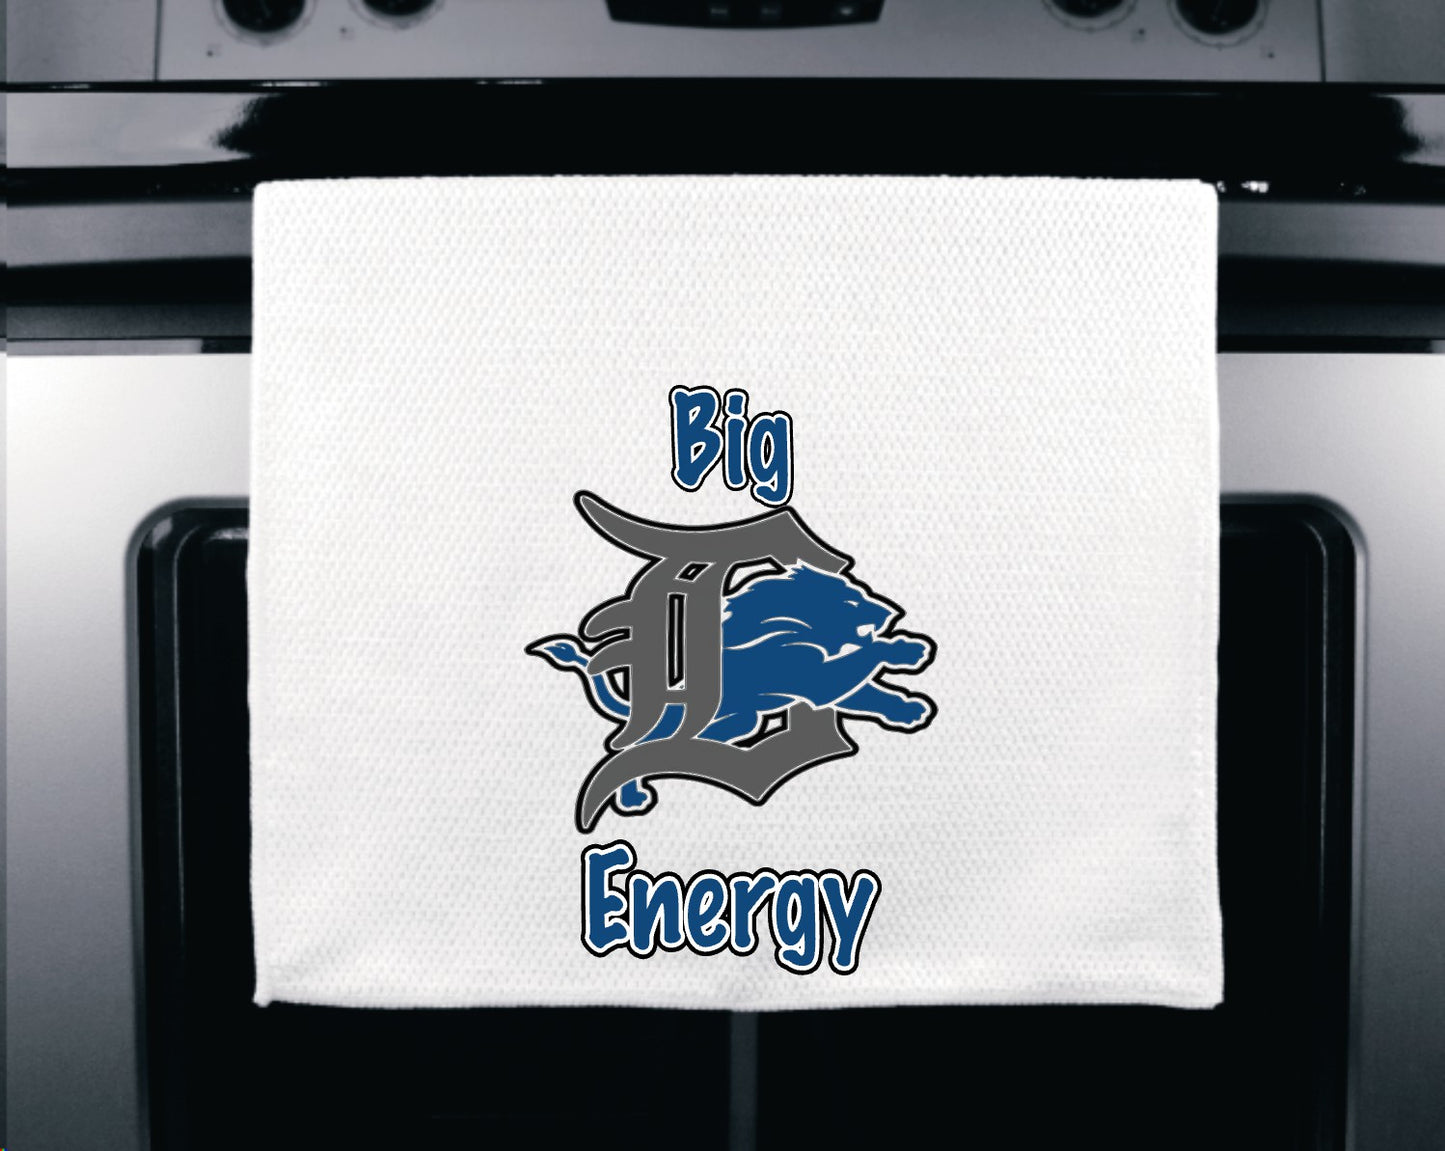 Detroit Lions "Big D Energy" towel OR cutting board